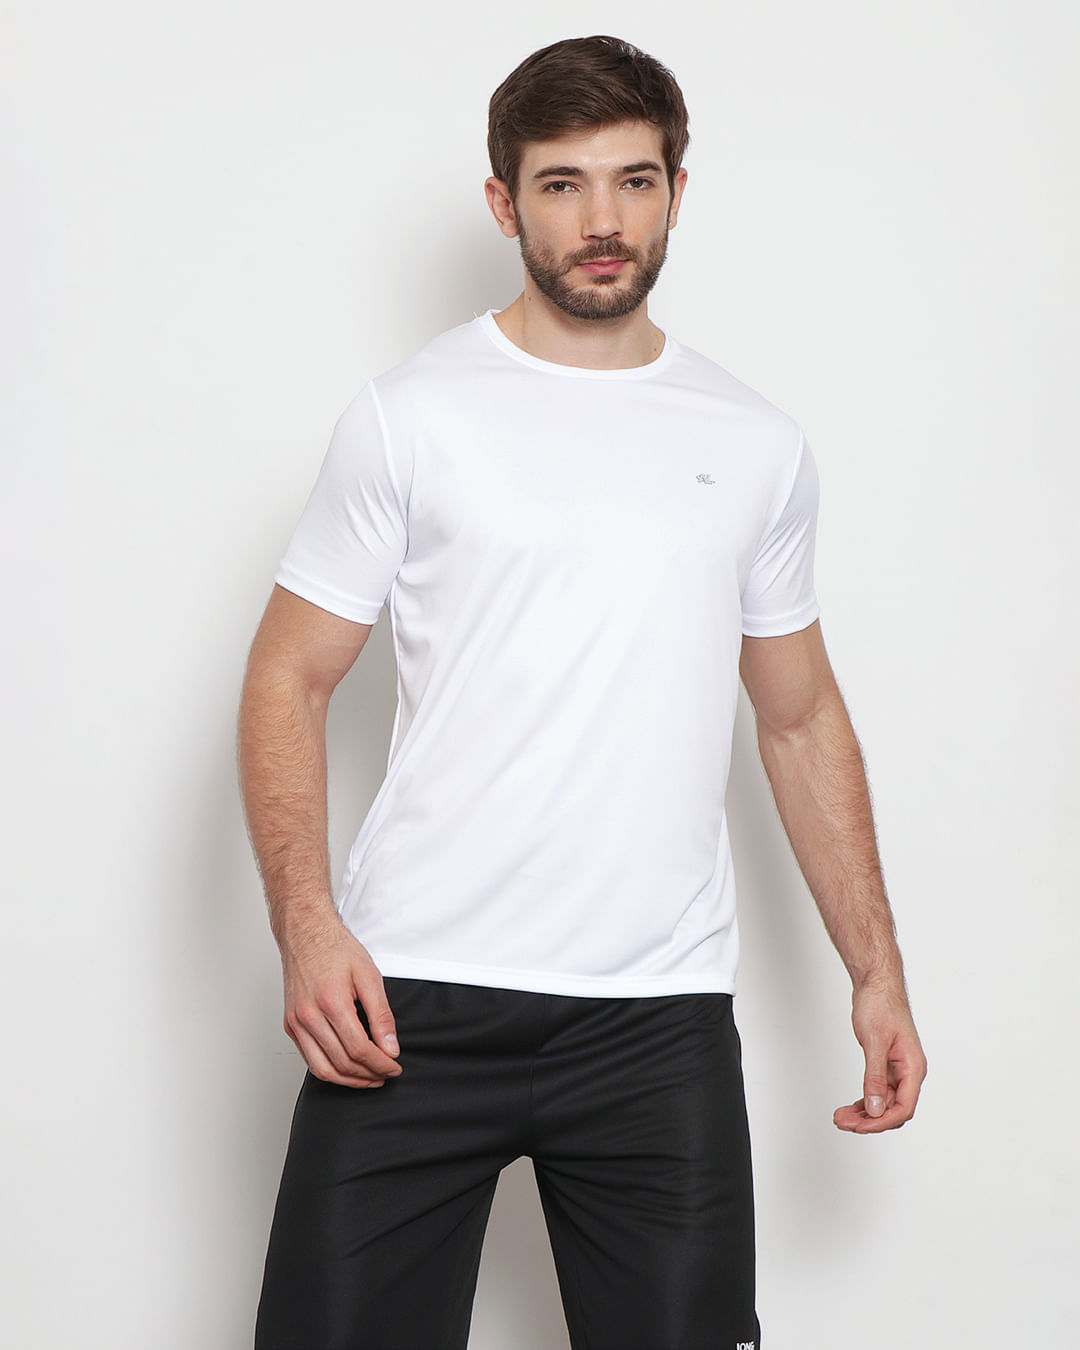 Camiseta Masculina Esportiva Dry Fit Manga Curta Branca